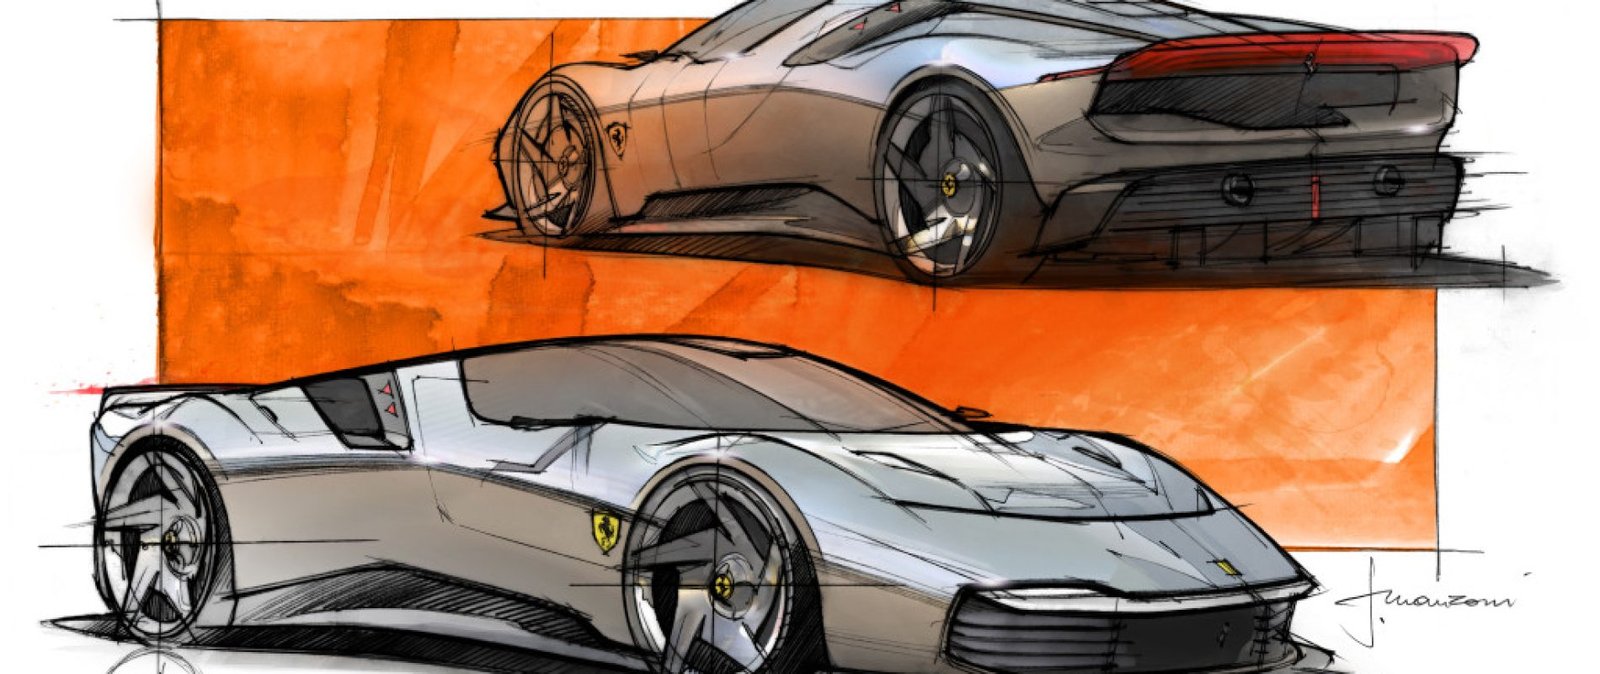 Ferrari_KC23_Sketch_01_FM_1024x768